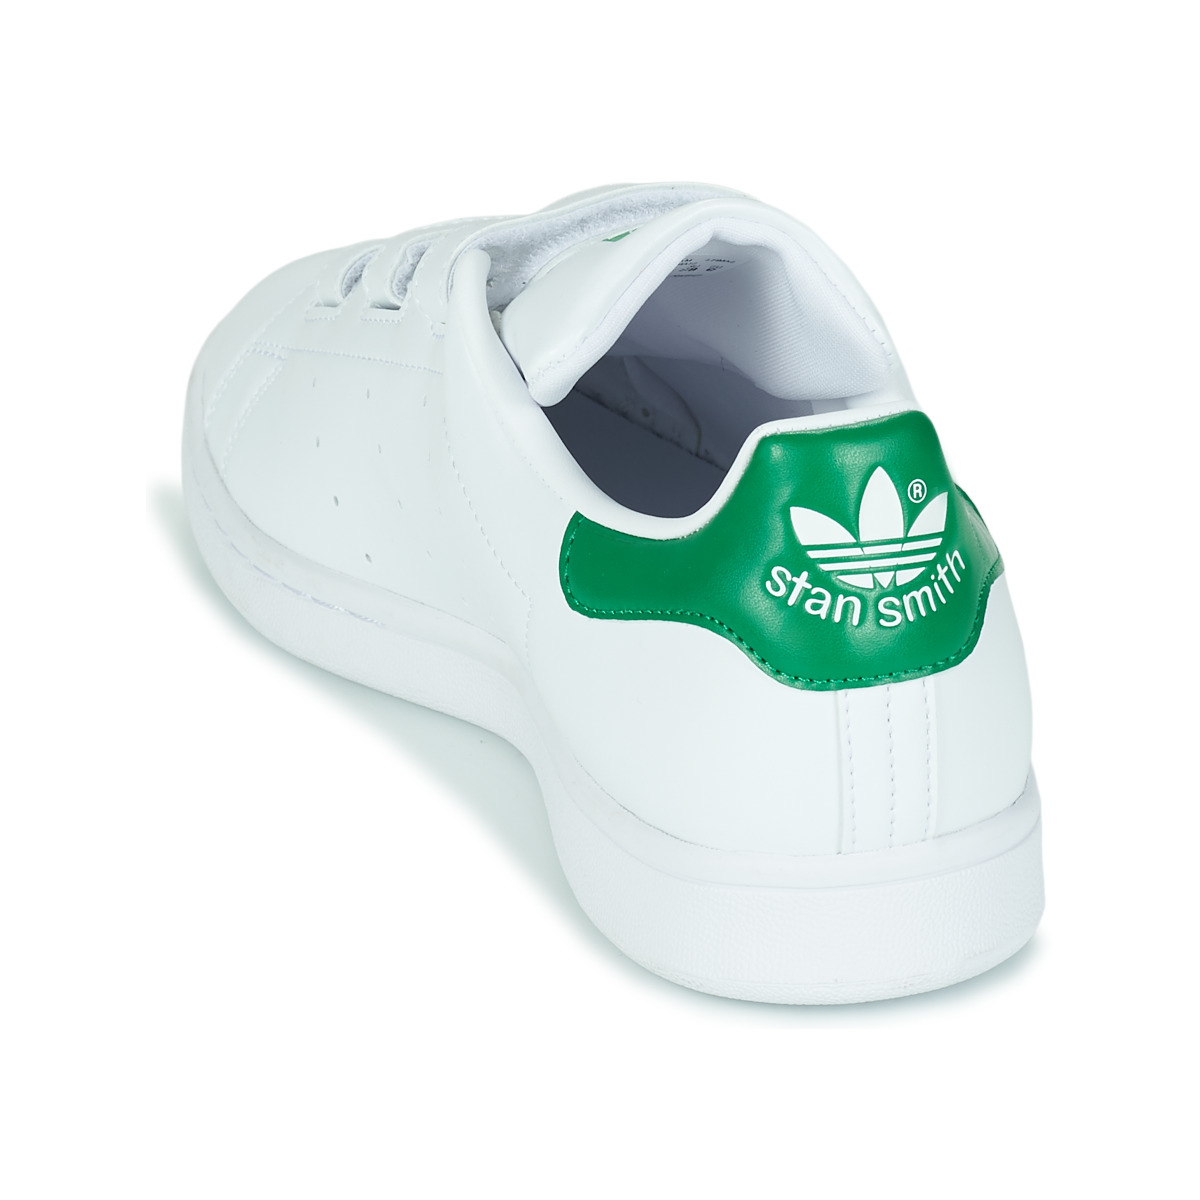 adidas Originals Blanc / vert STAN SMITH CF ECO-RESPONSABLE 8kb0jj1D